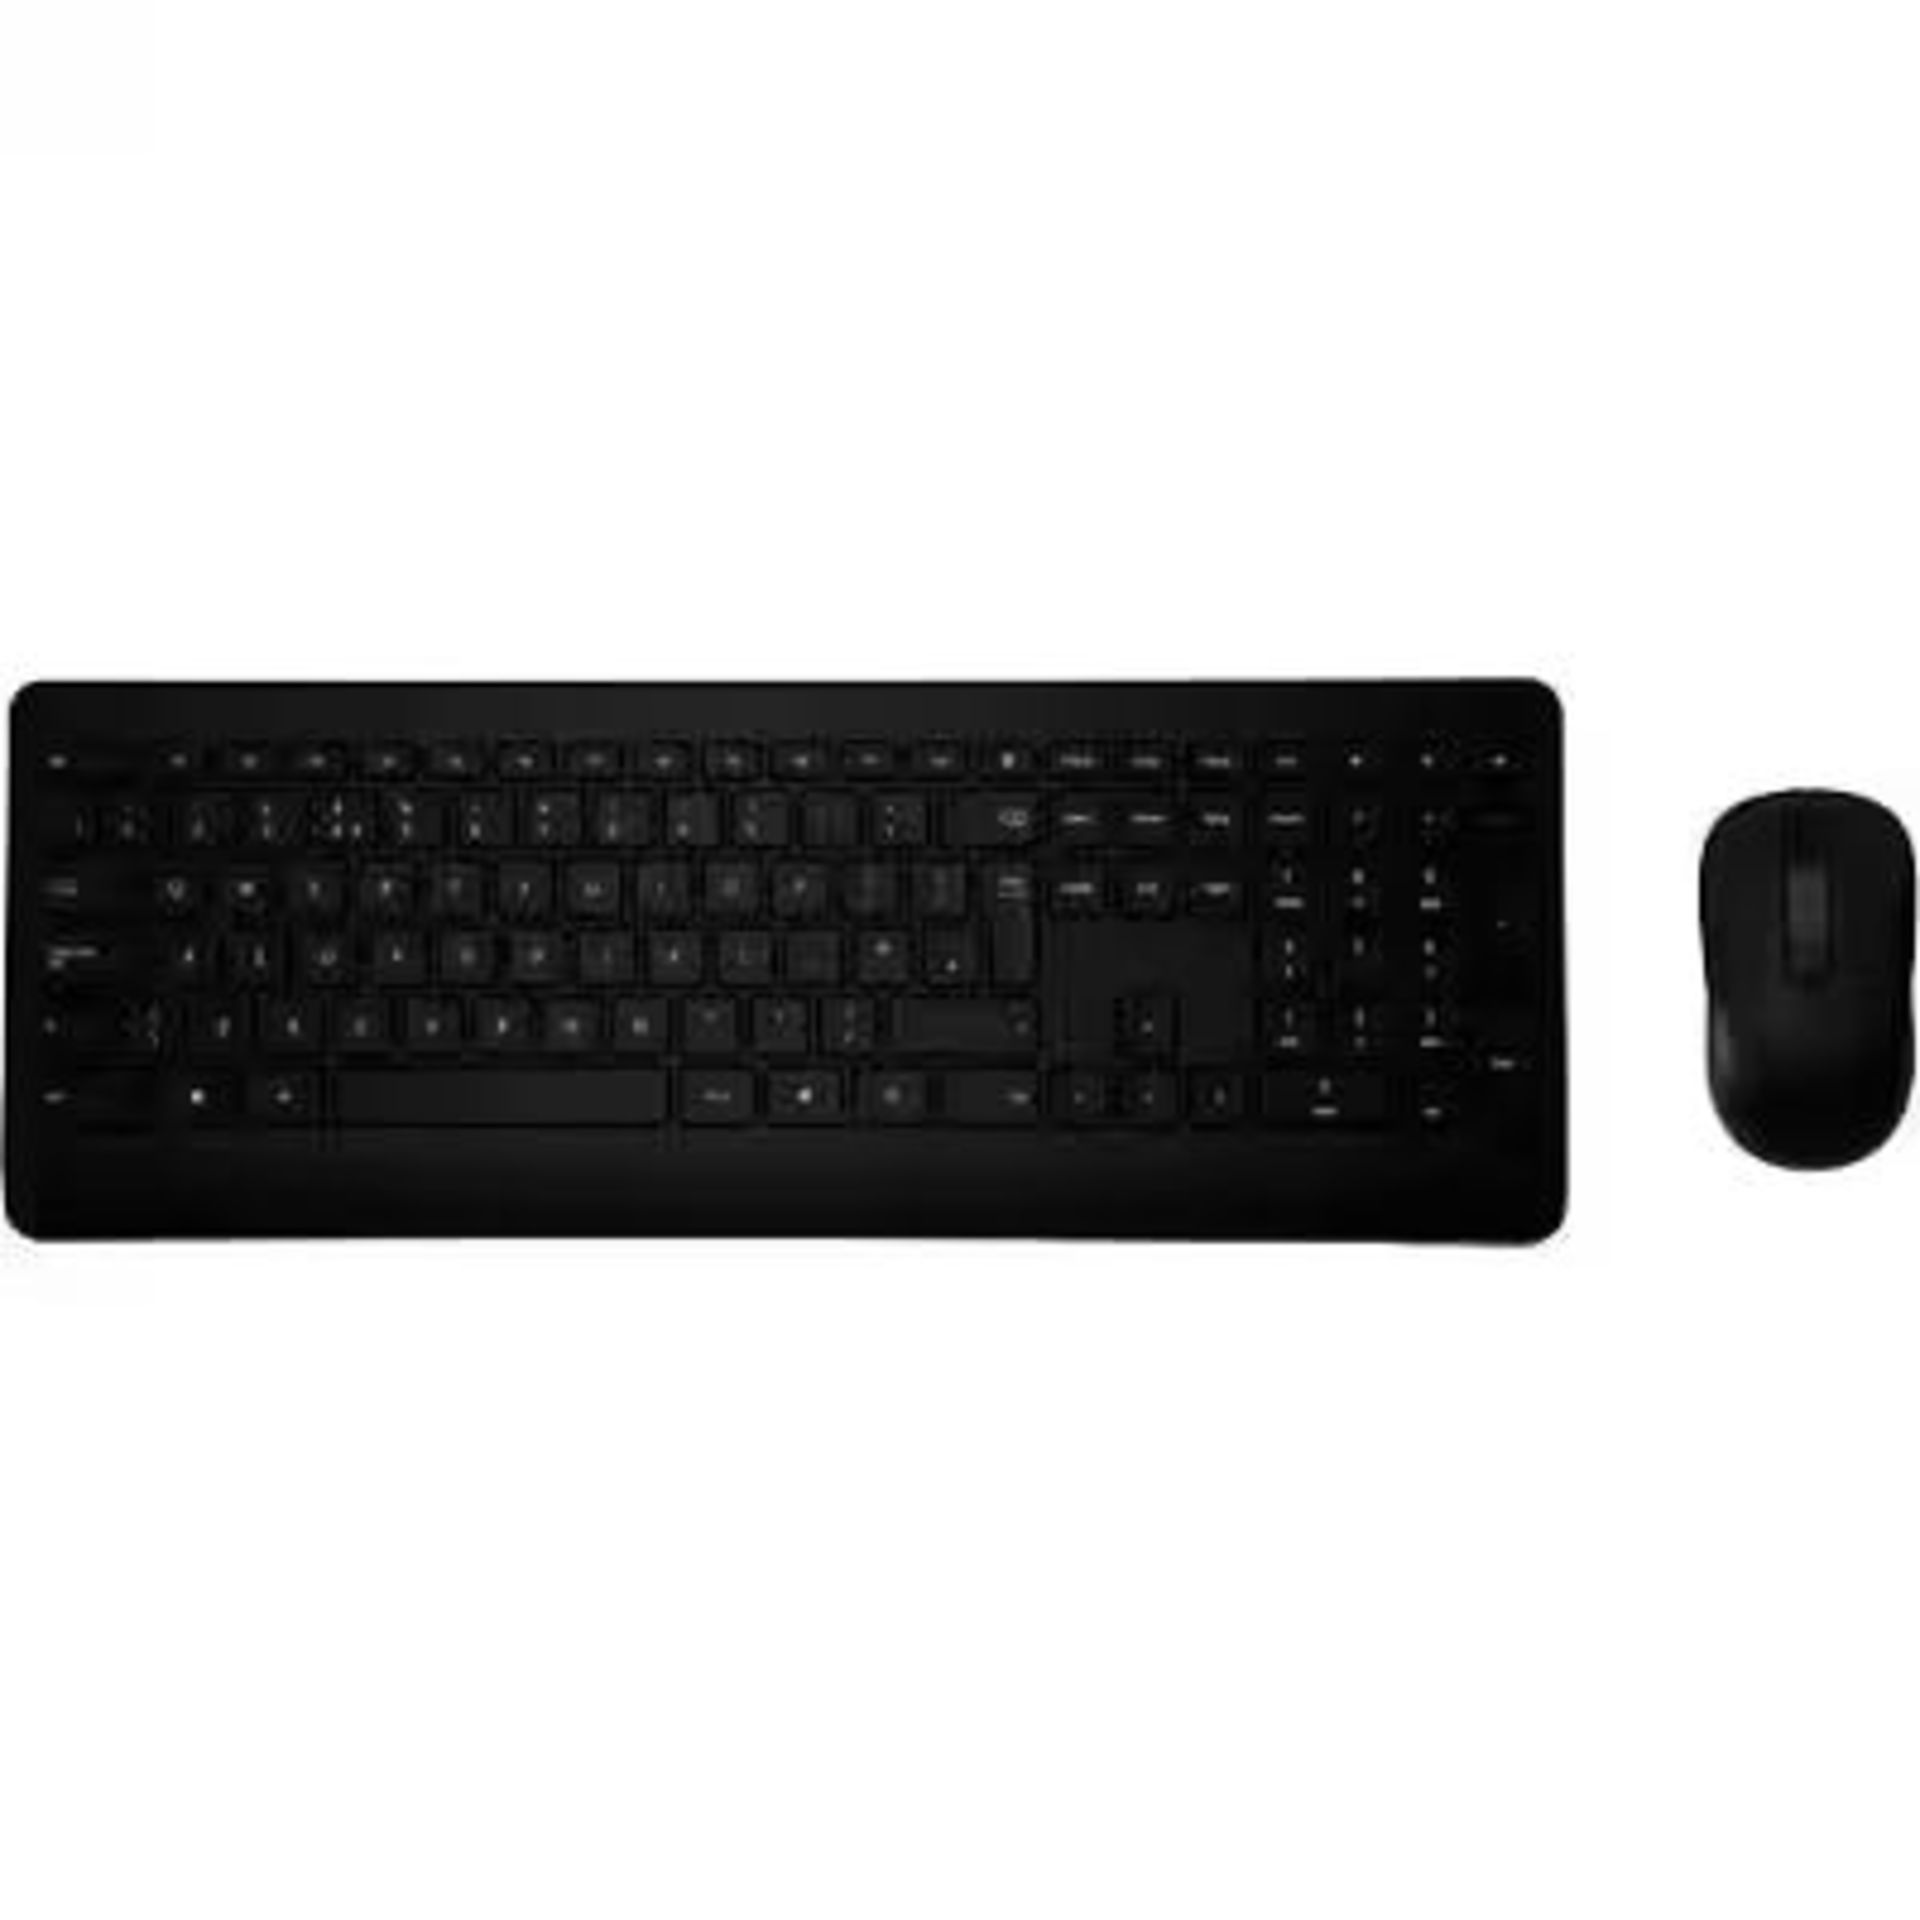 Microsoft Wireless Keyboard and Mouse 900 QWERTY Black. - EBR.